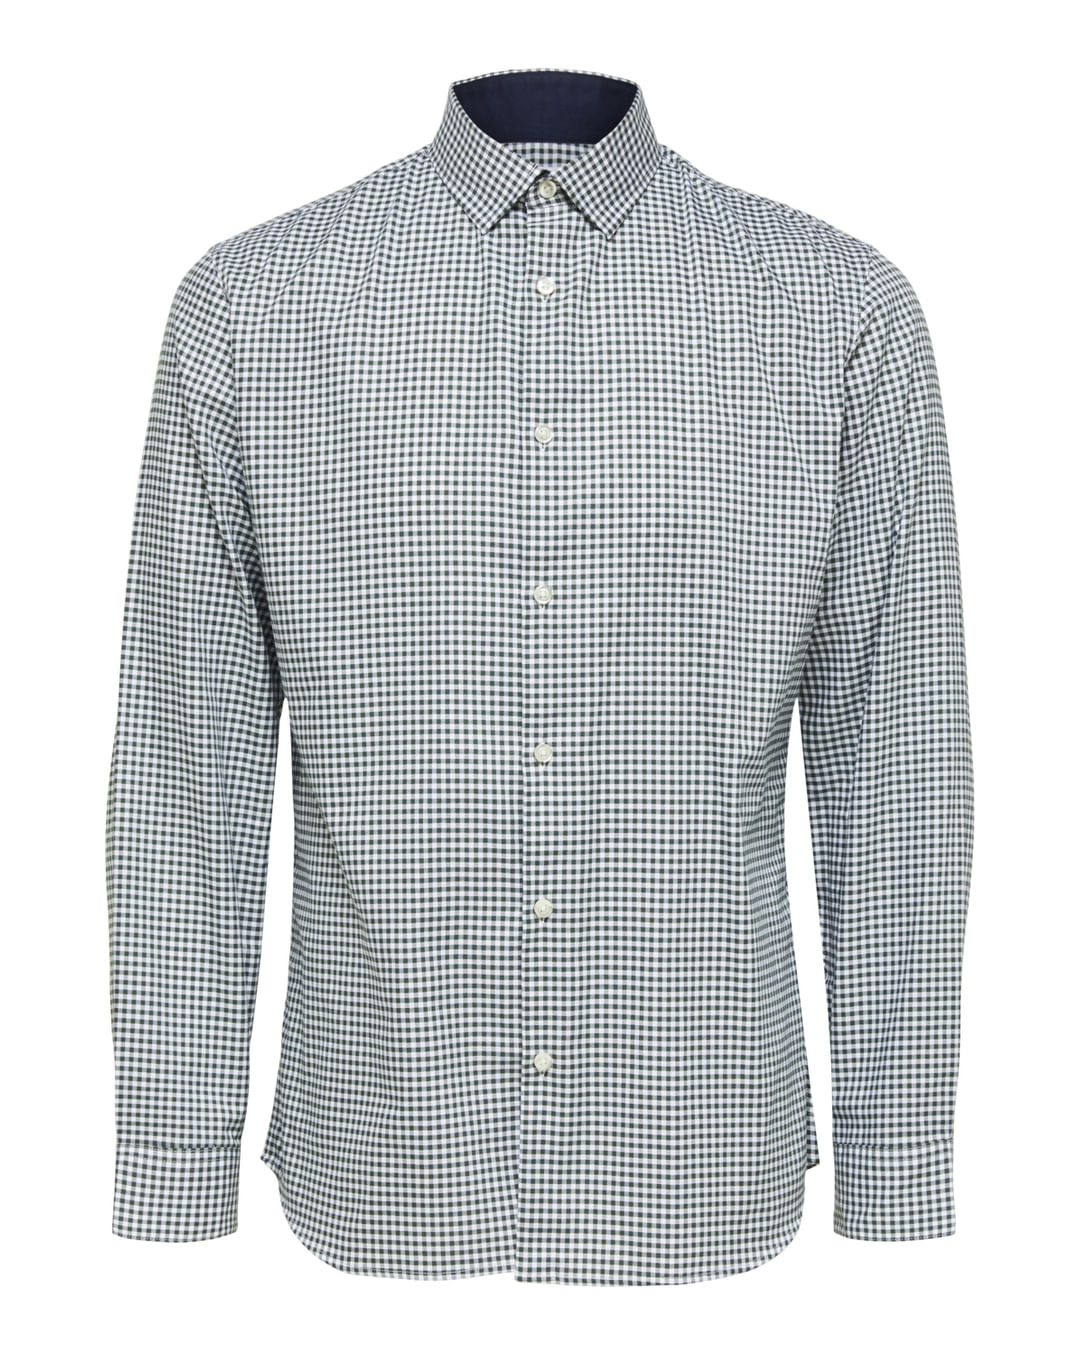 Buy Green Check Full Sleeves Shirt for Men Online at SELECTED HOMME ...